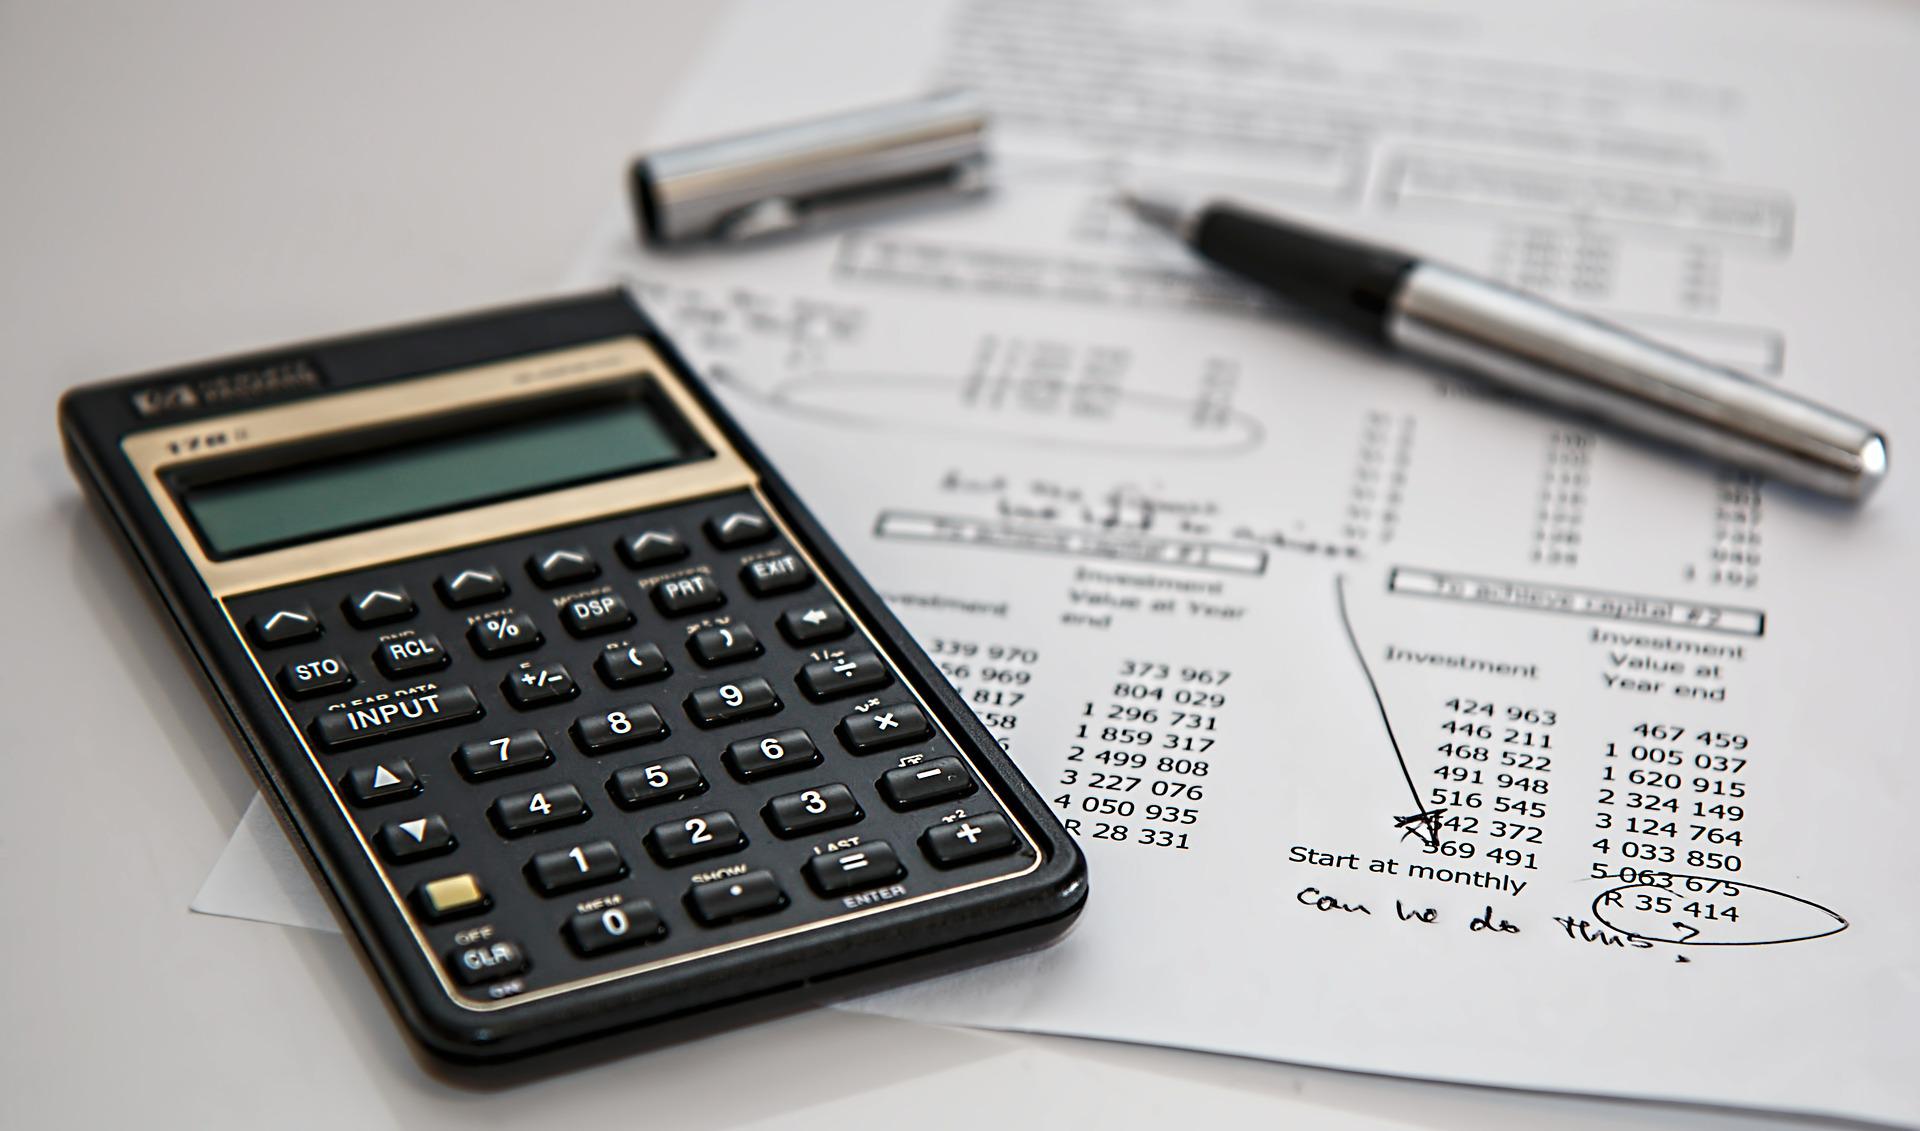 Calculator, accounting, financial data